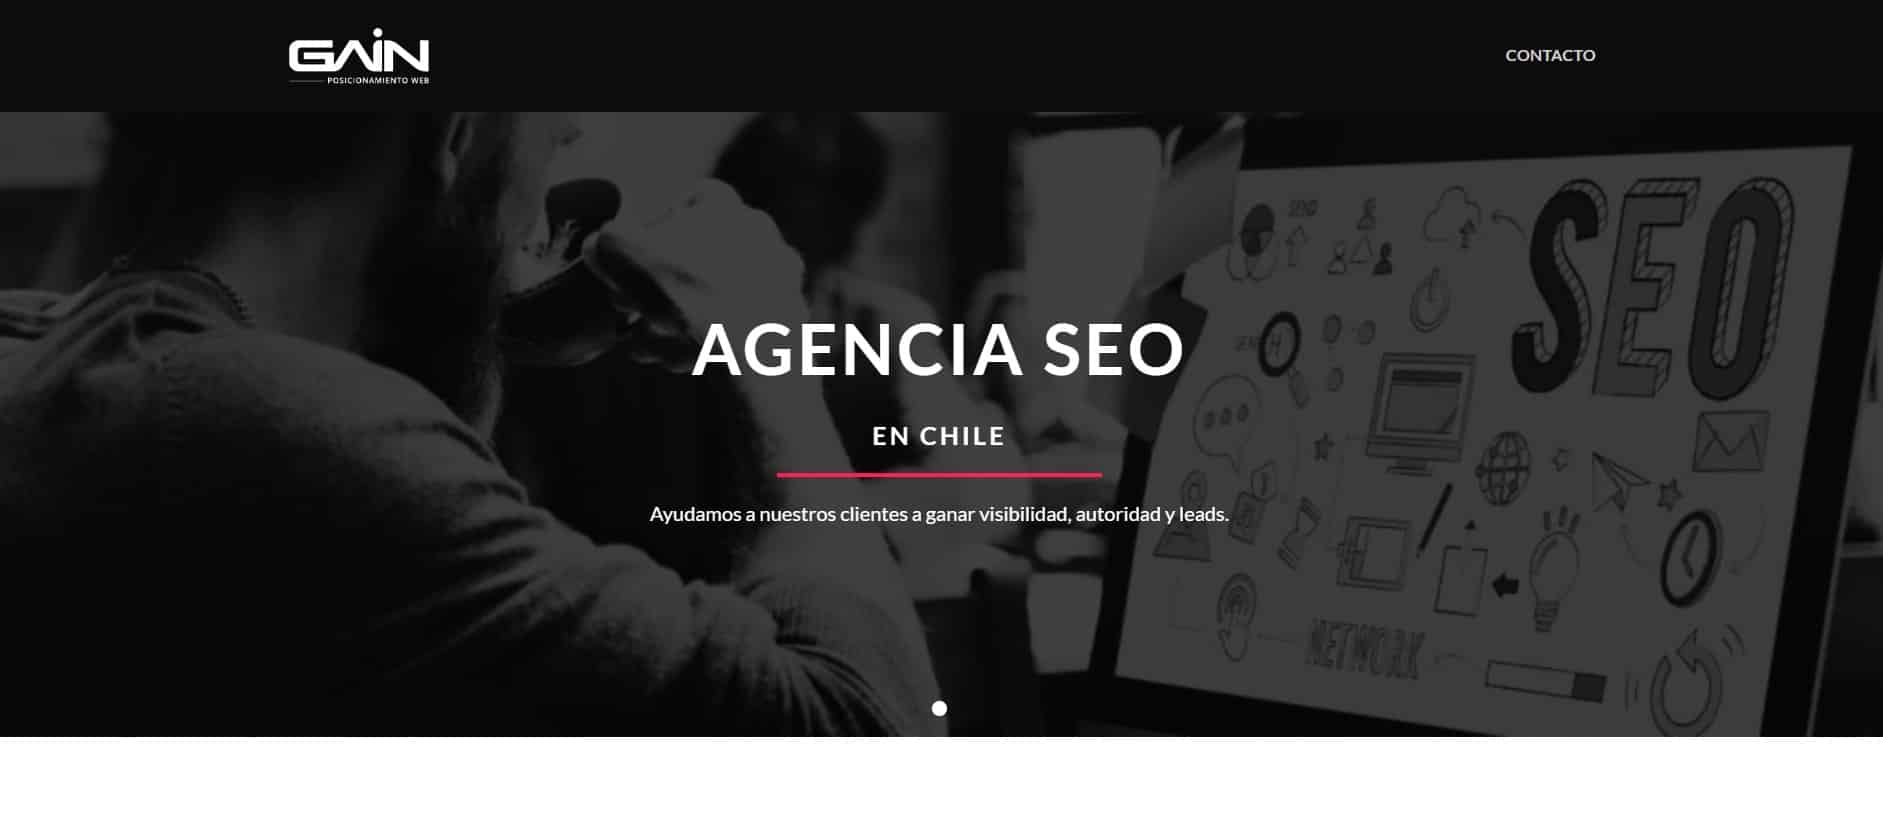 Gain agencia seo en Chile